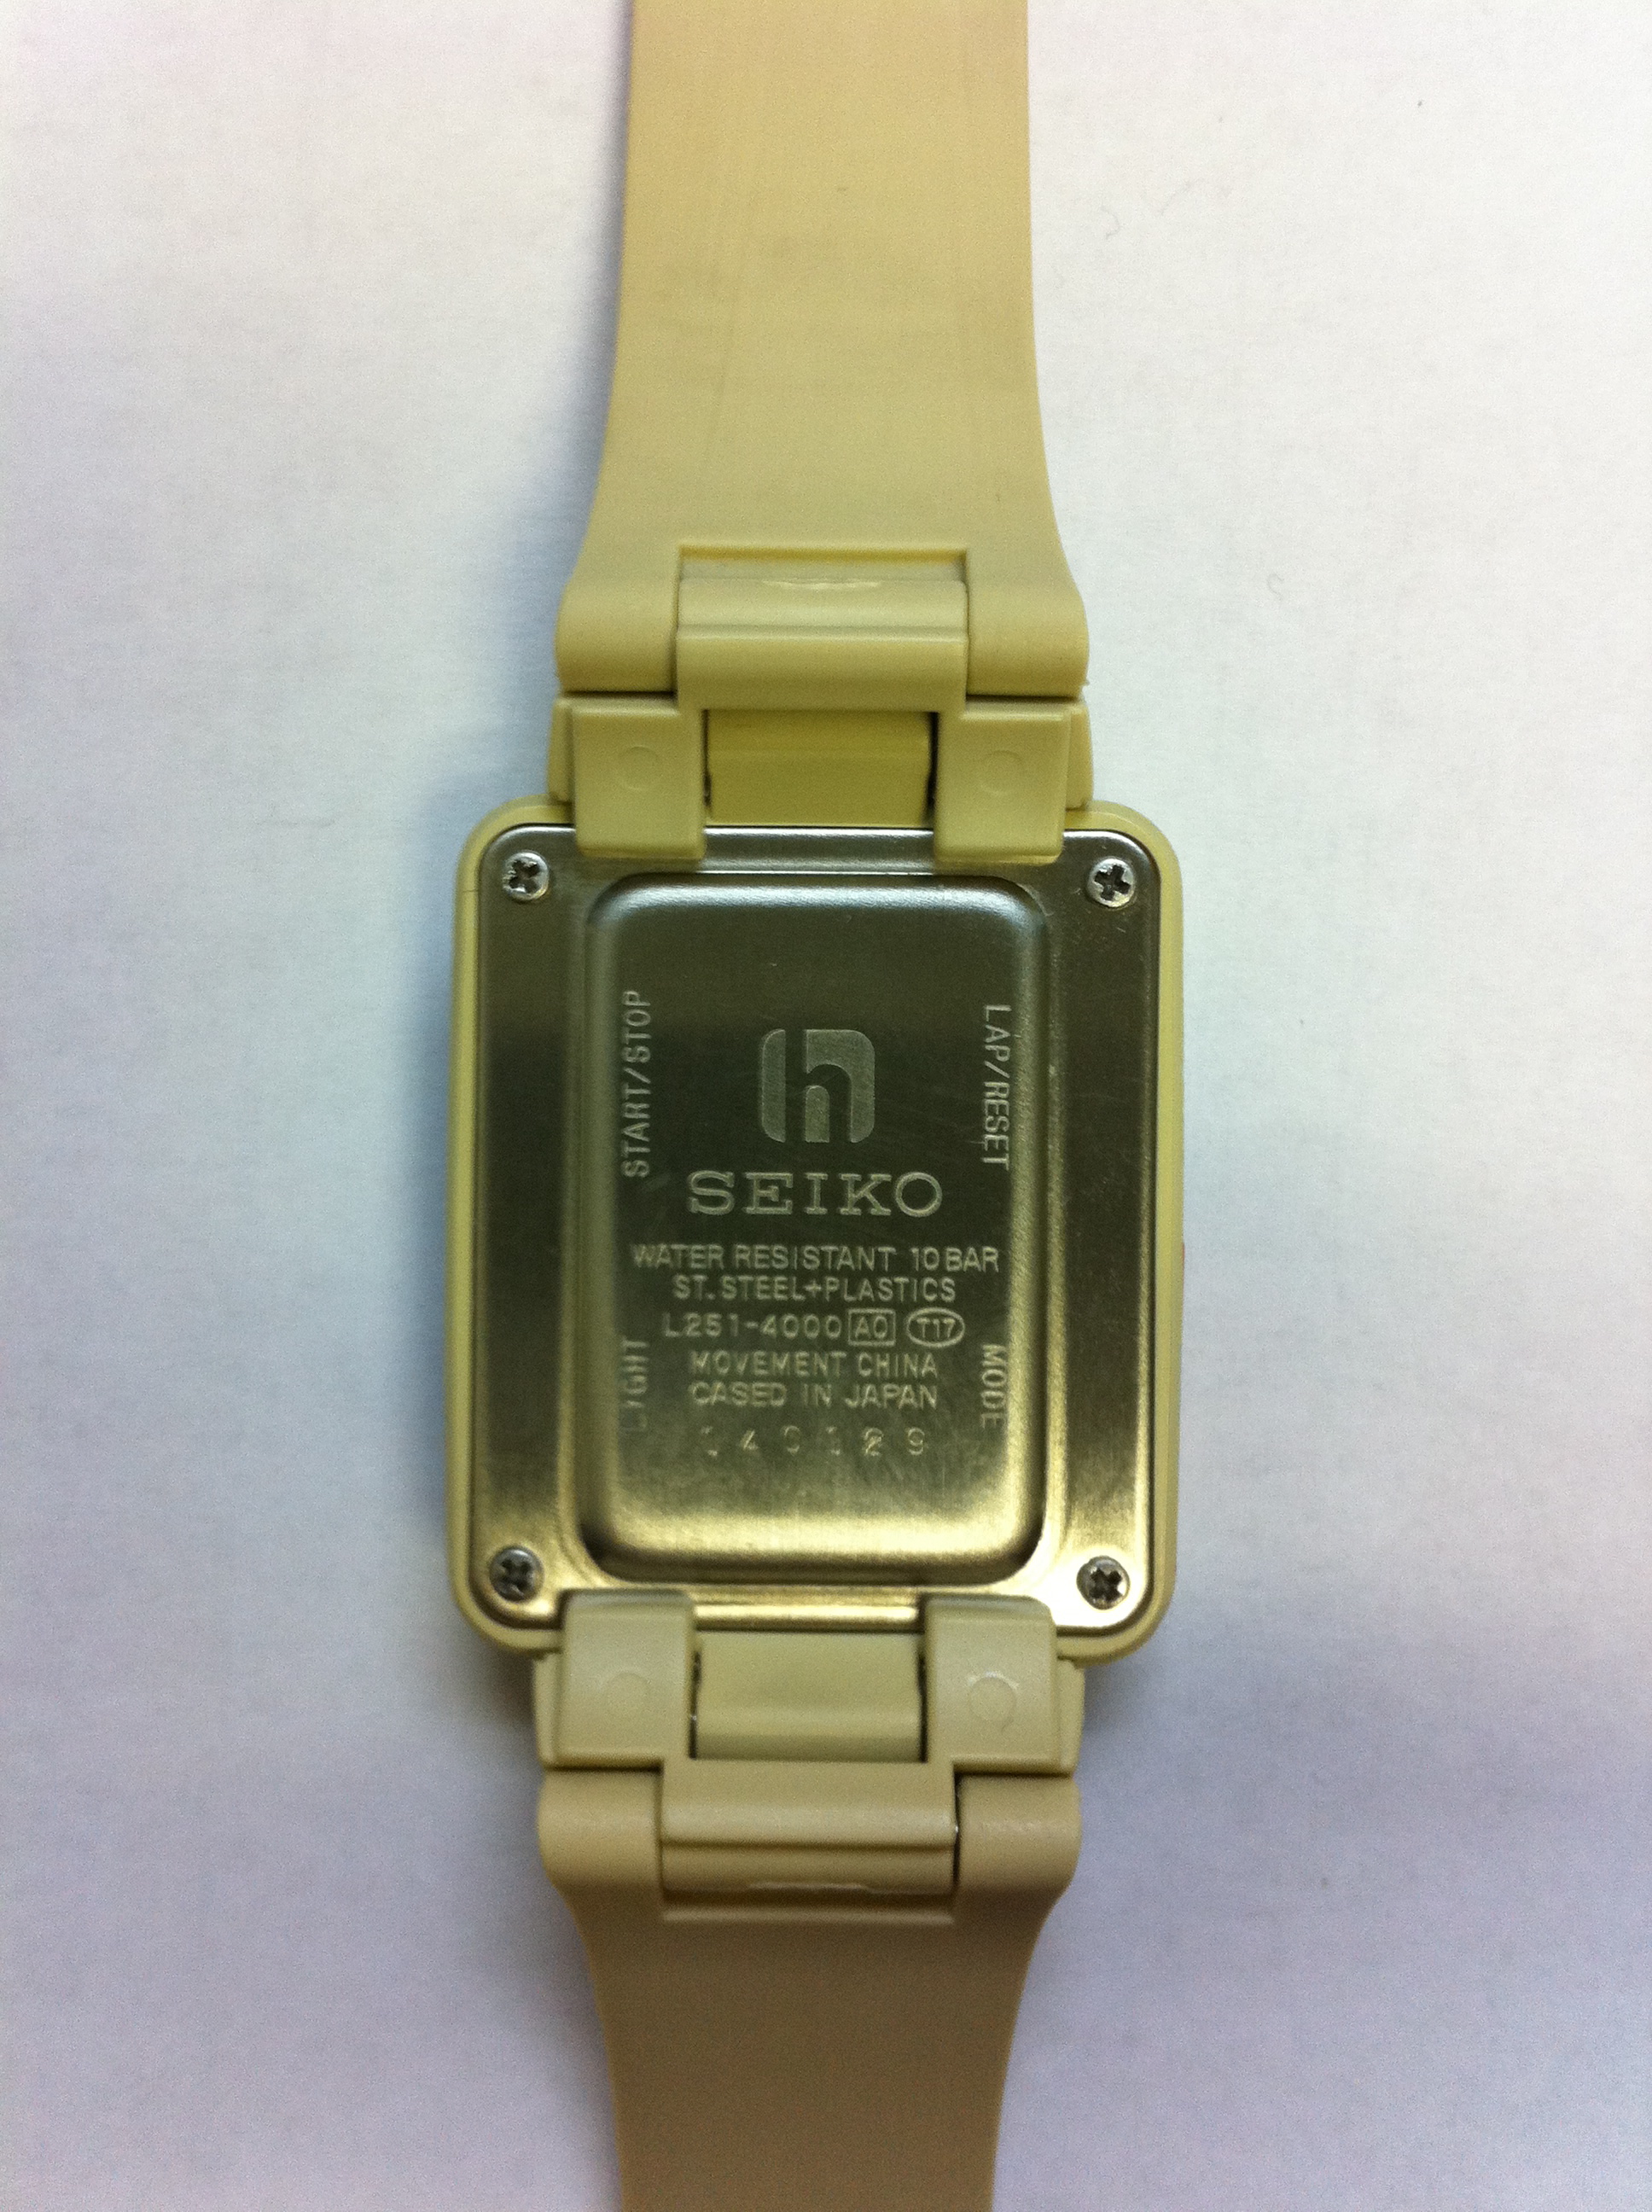 FS - Used but SUPER RARE Seiko H-Timetron SLIM Watch - $300 OBO |  WatchCharts